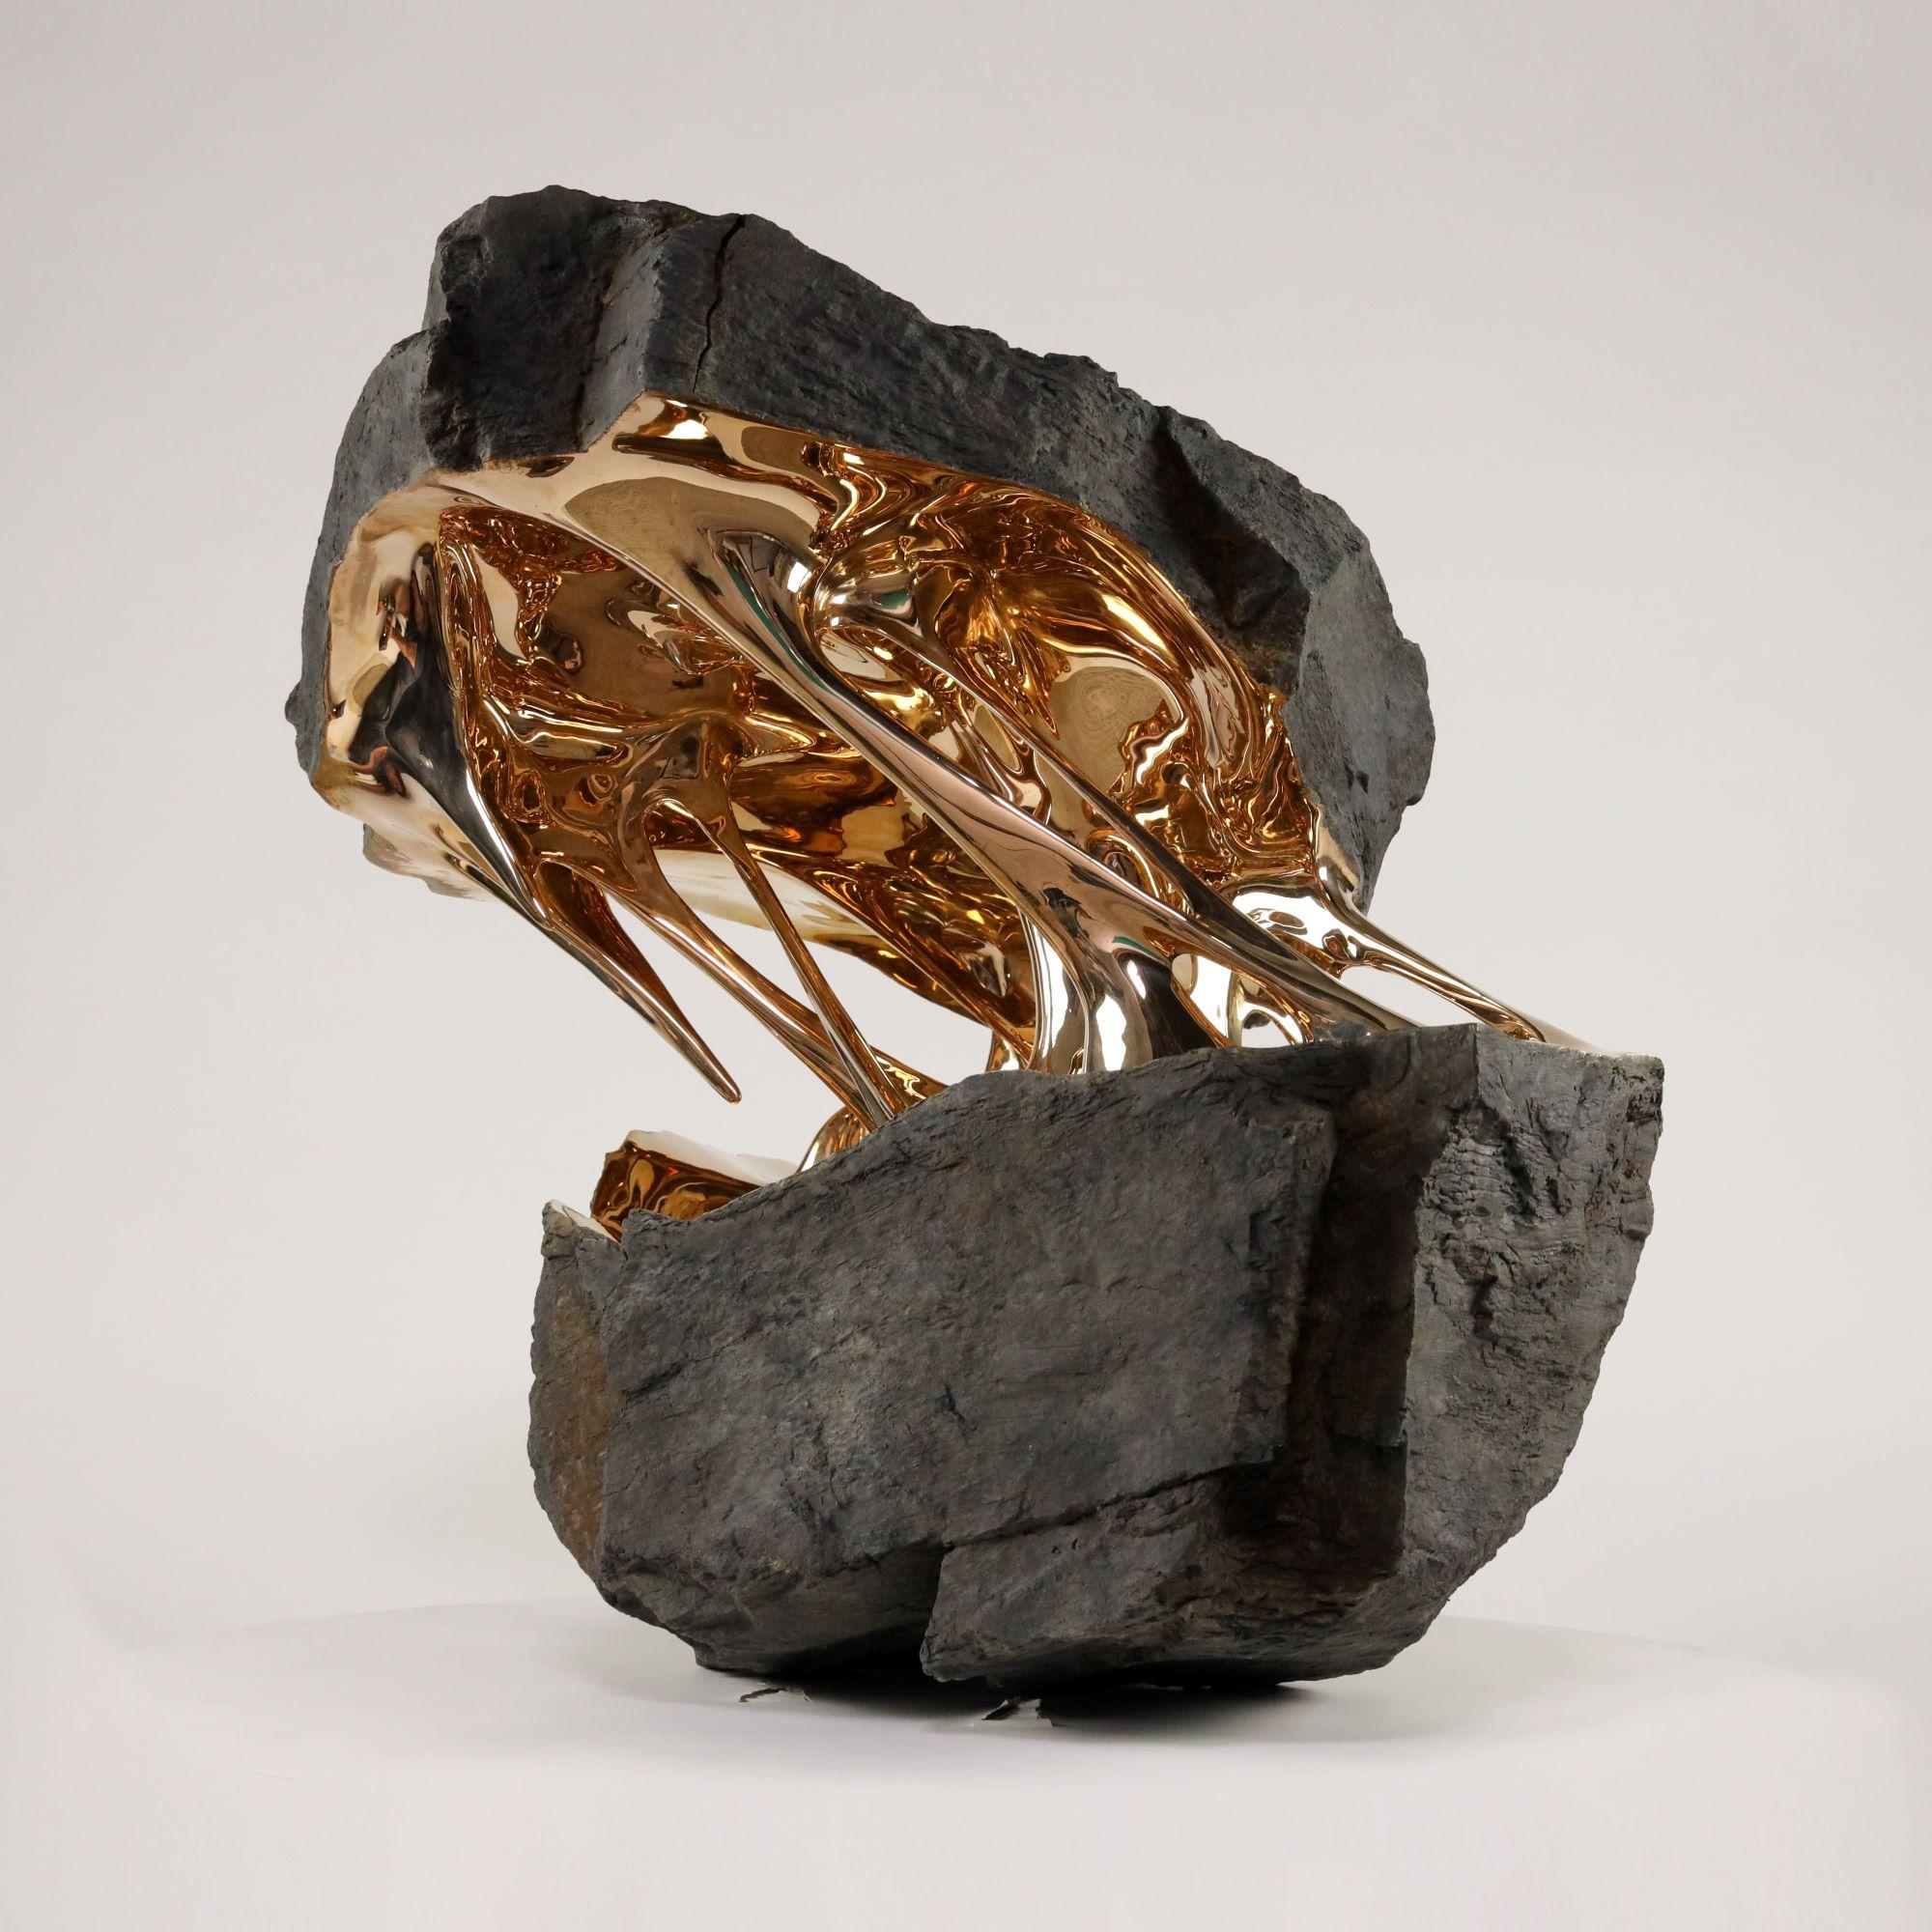 Gaïa by Romain Langlois - Rock-like bronze sculpture, golden, abstract For Sale 17